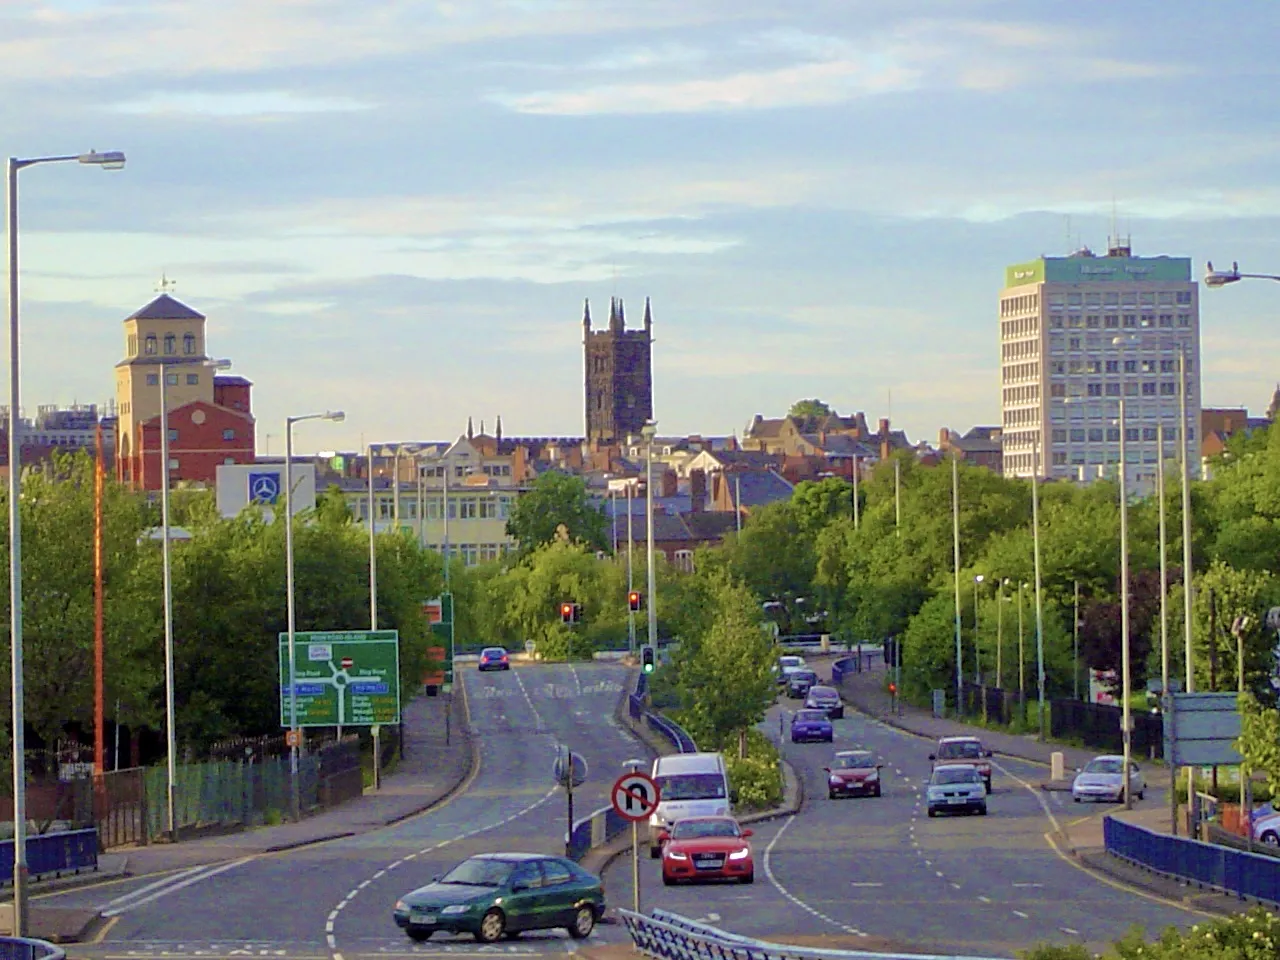 Image of West Midlands